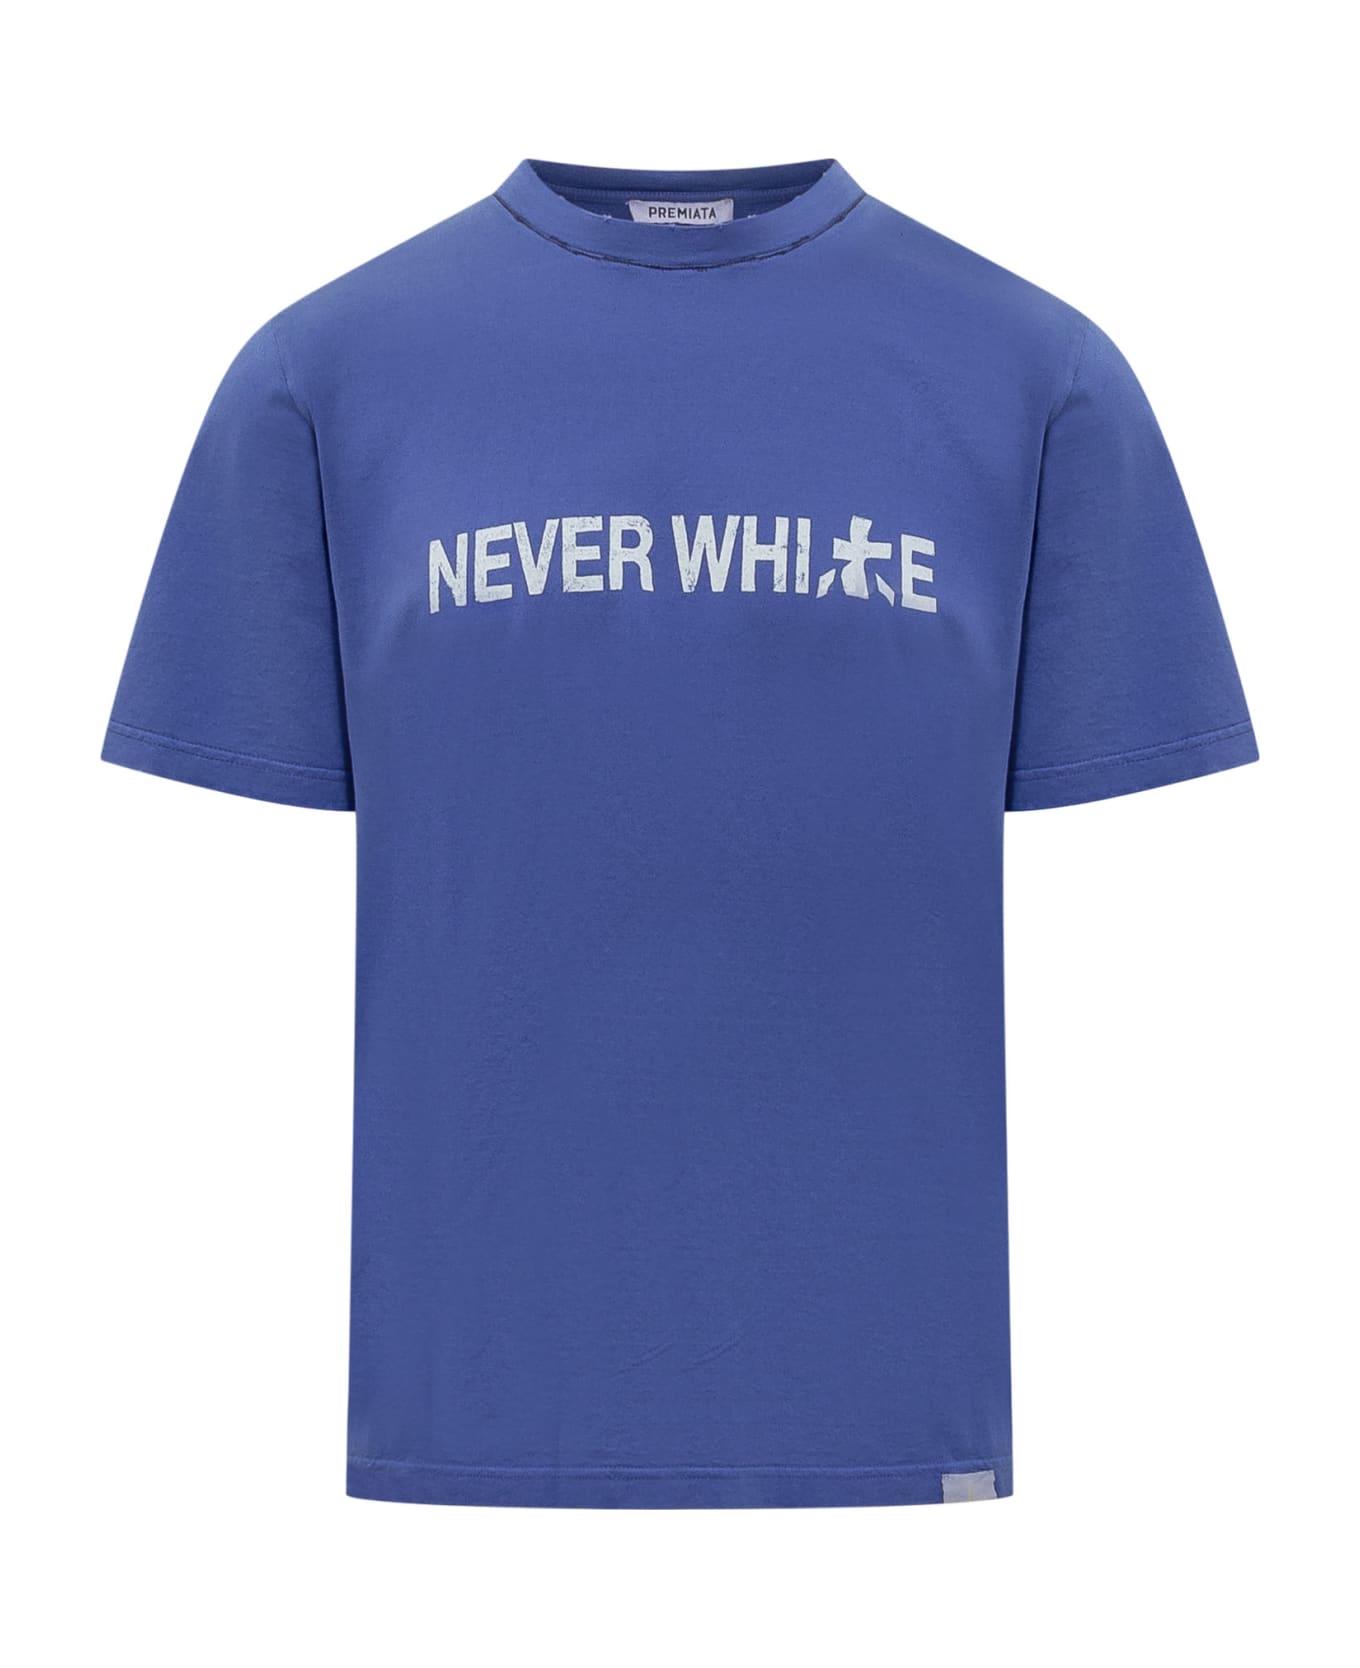 Premiata T-shirt With Print - BLUE